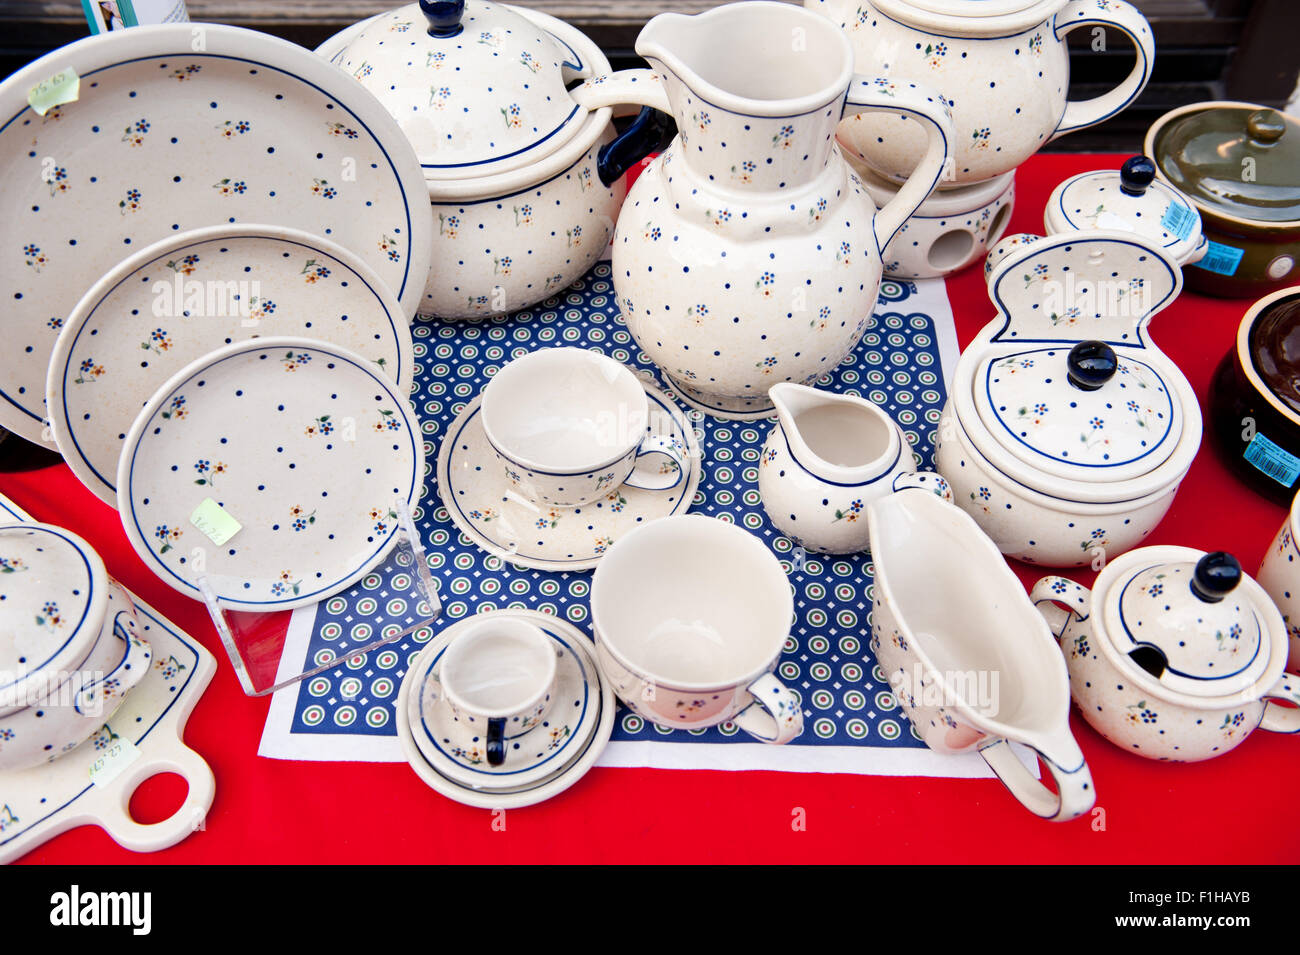 Boleslawiec Ceramics folk tableware Stock Photo - Alamy